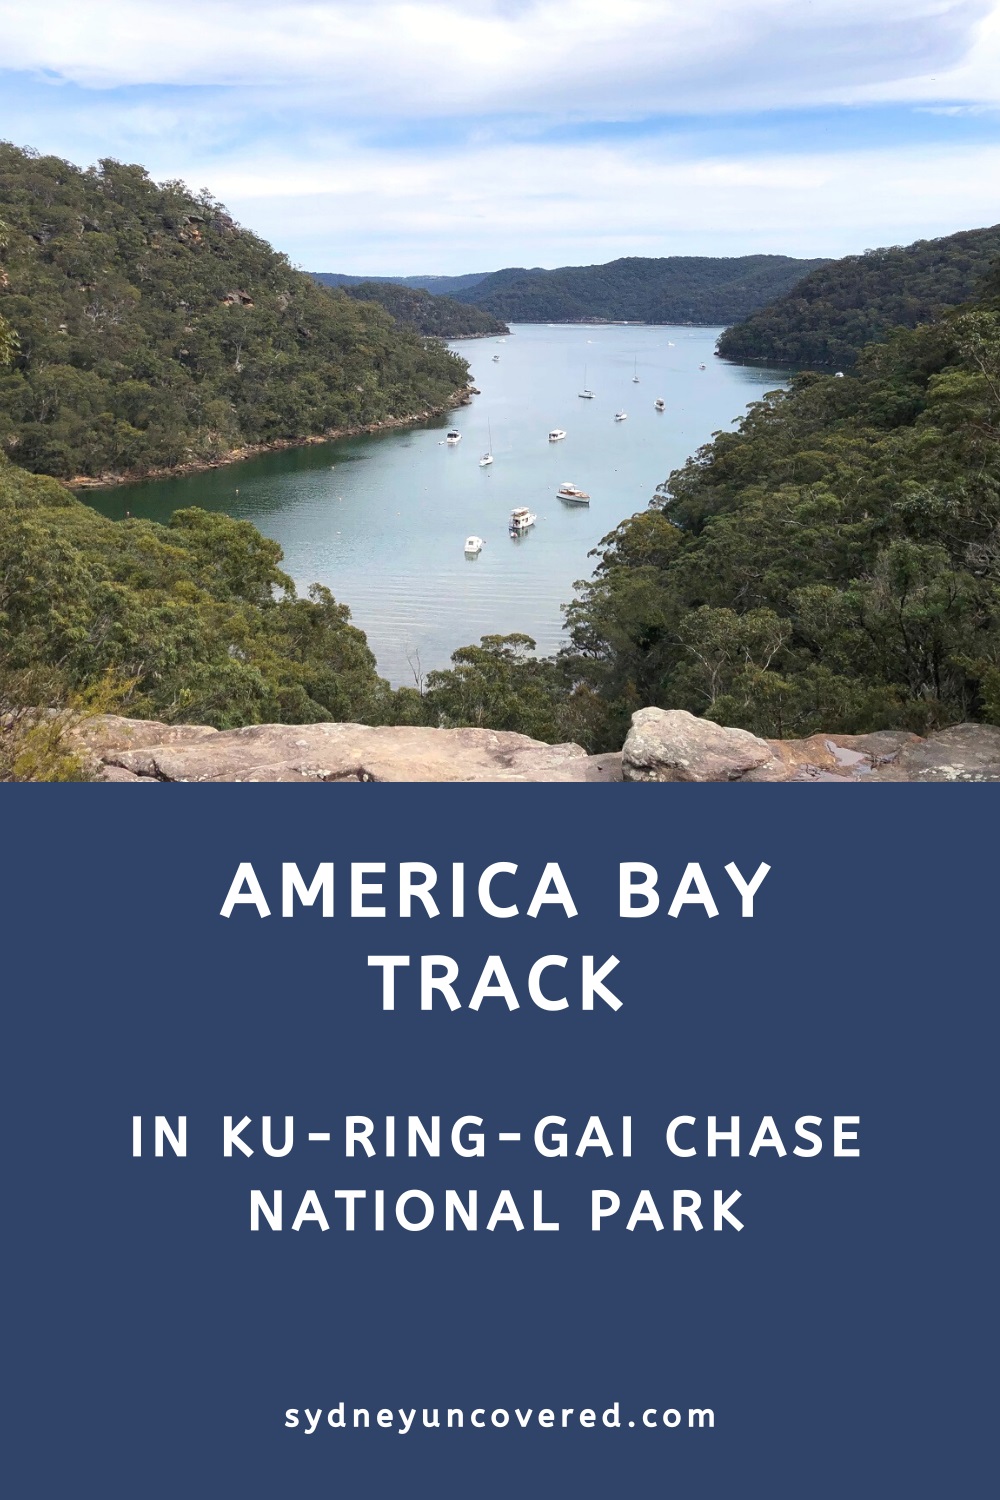 America Bay Track in Ku-ring-gai Chase National Park